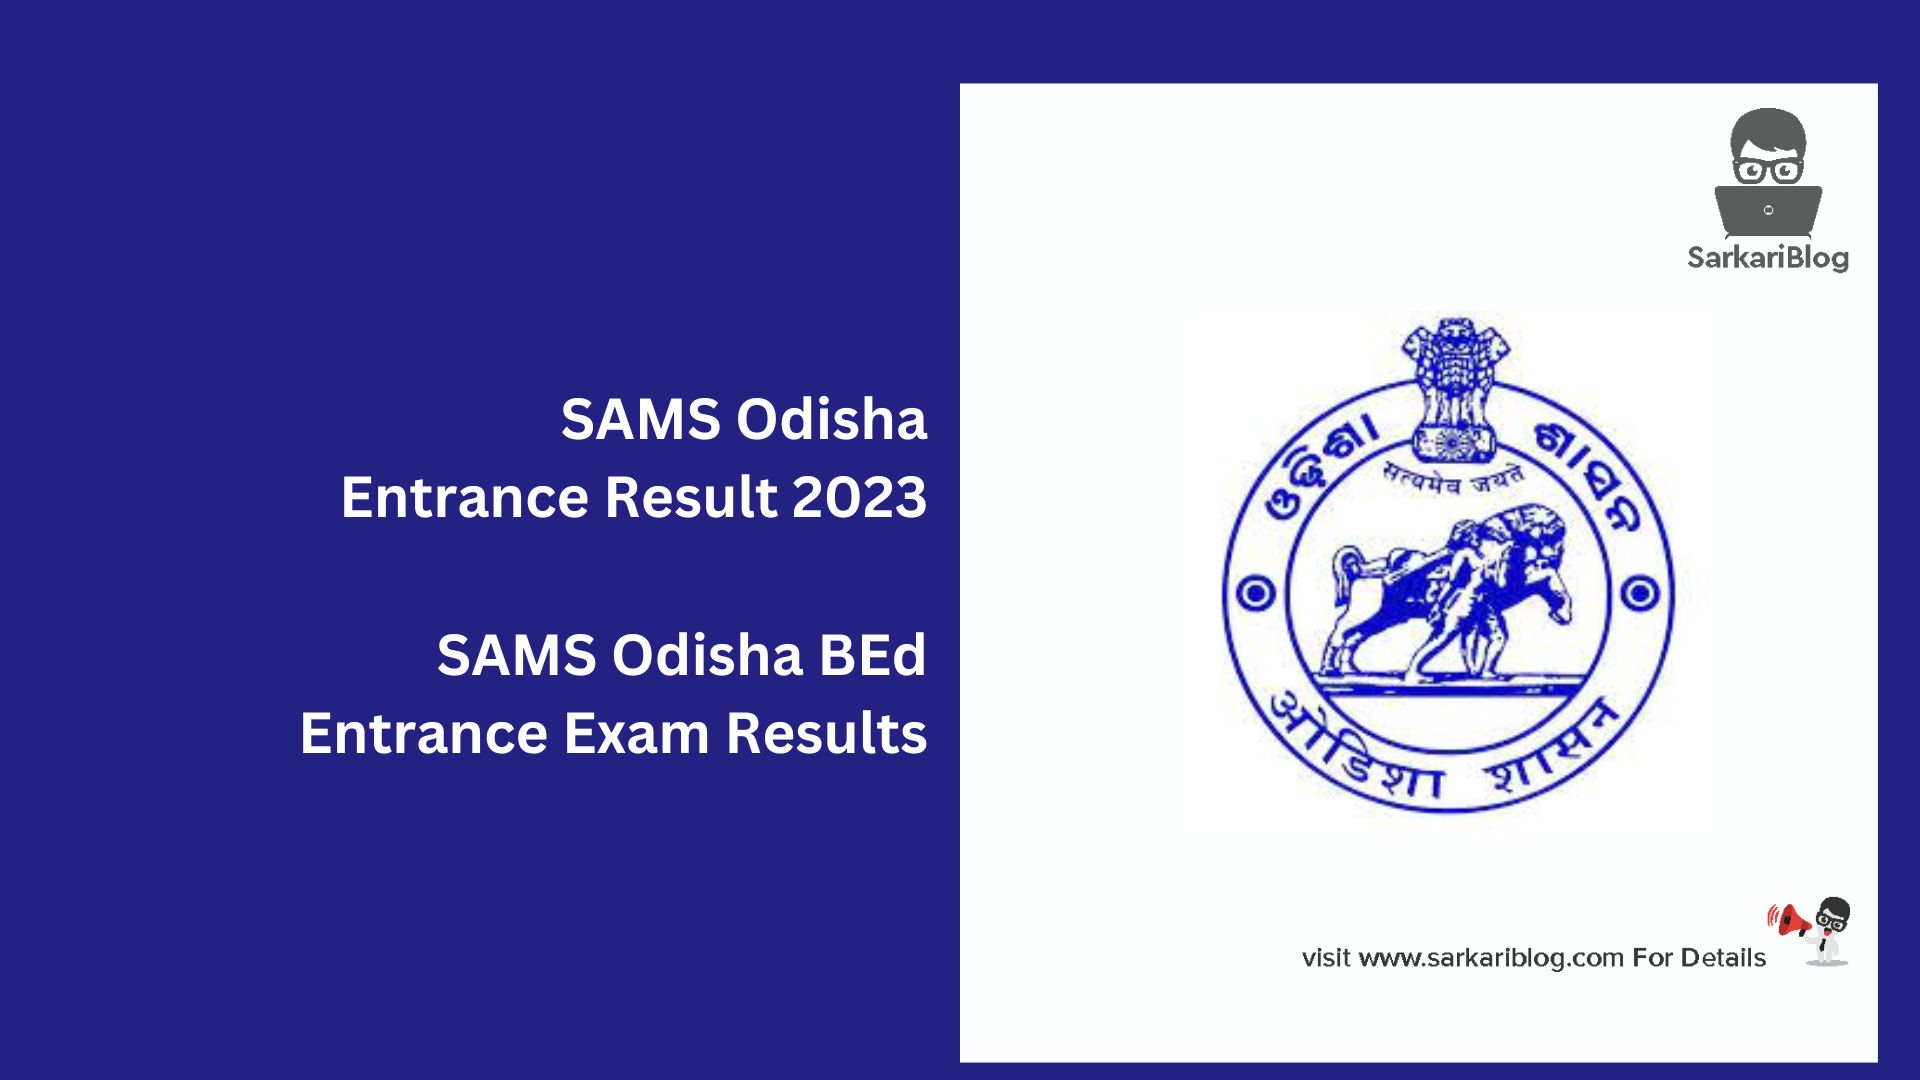 SAMS Odisha Entrance Result 2023